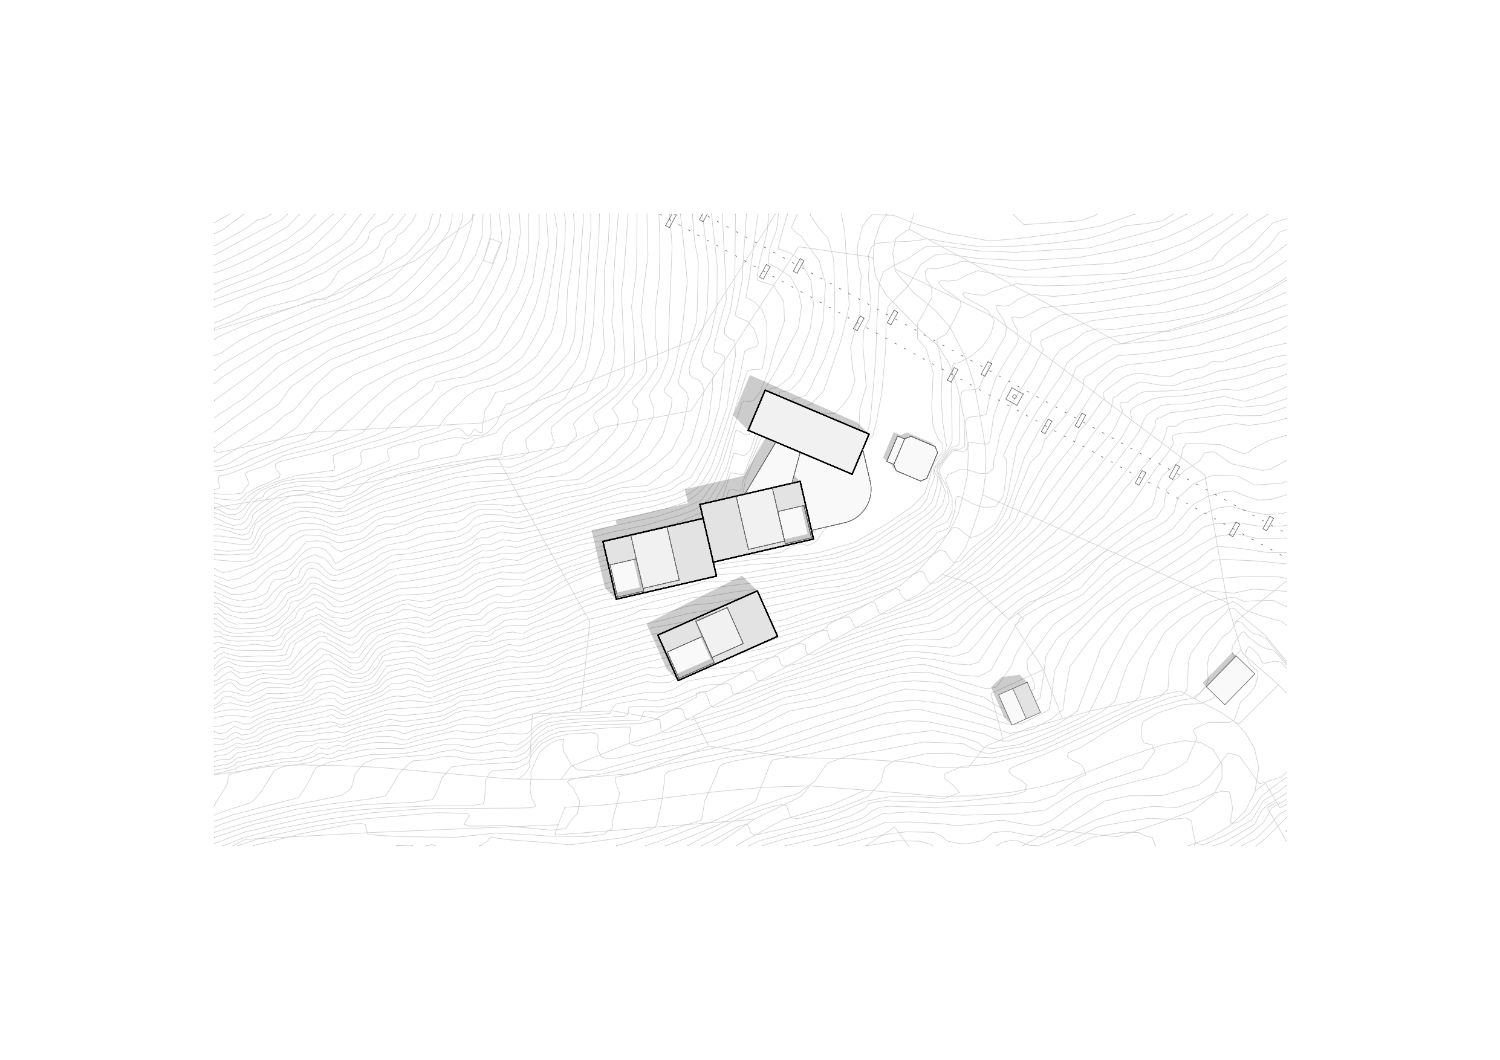 Plan drawing of Hotel Alpenstern